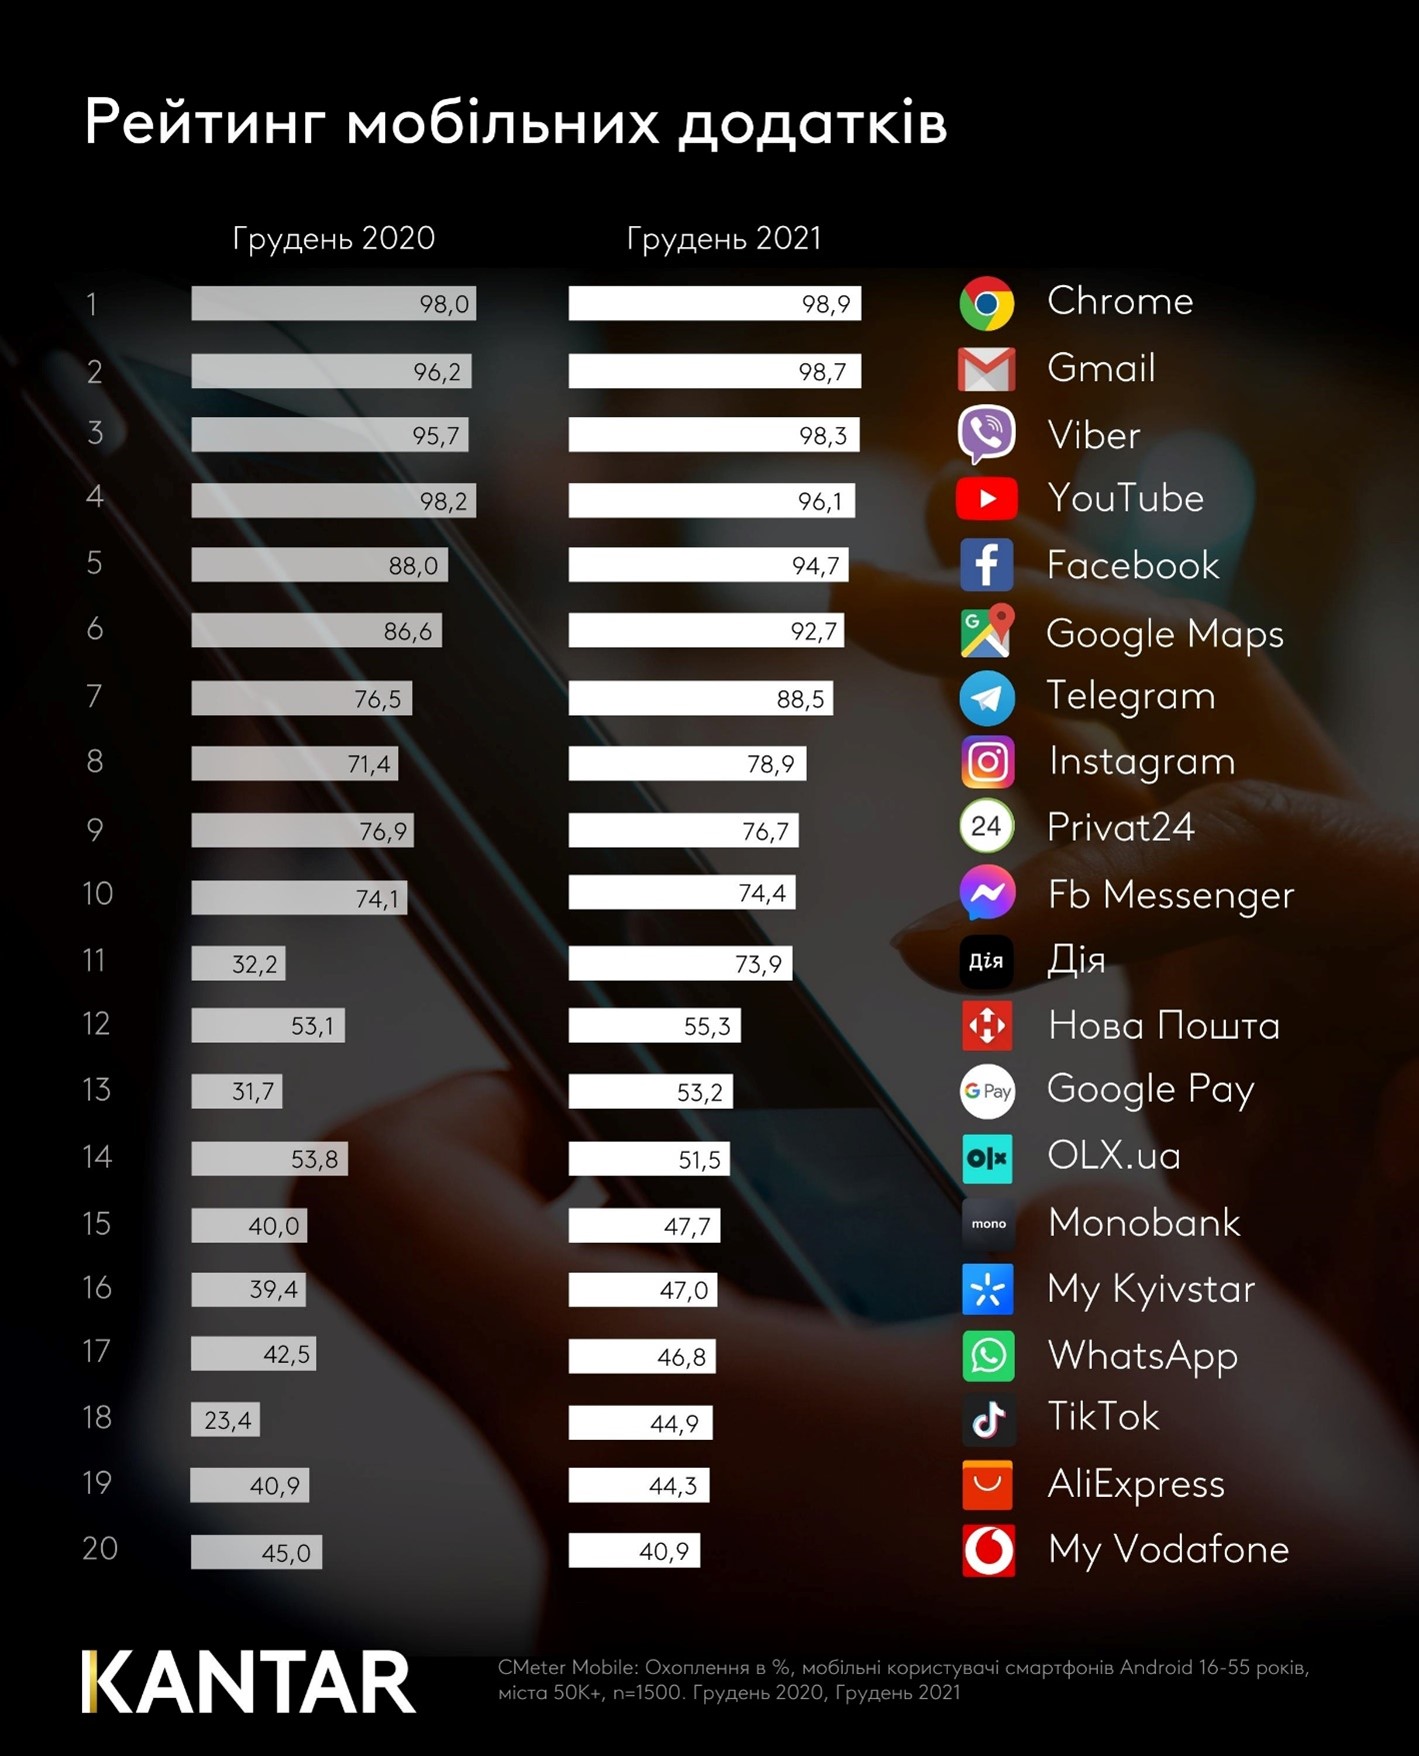 The most popular apps 2020-2021 Kantar Ukraine